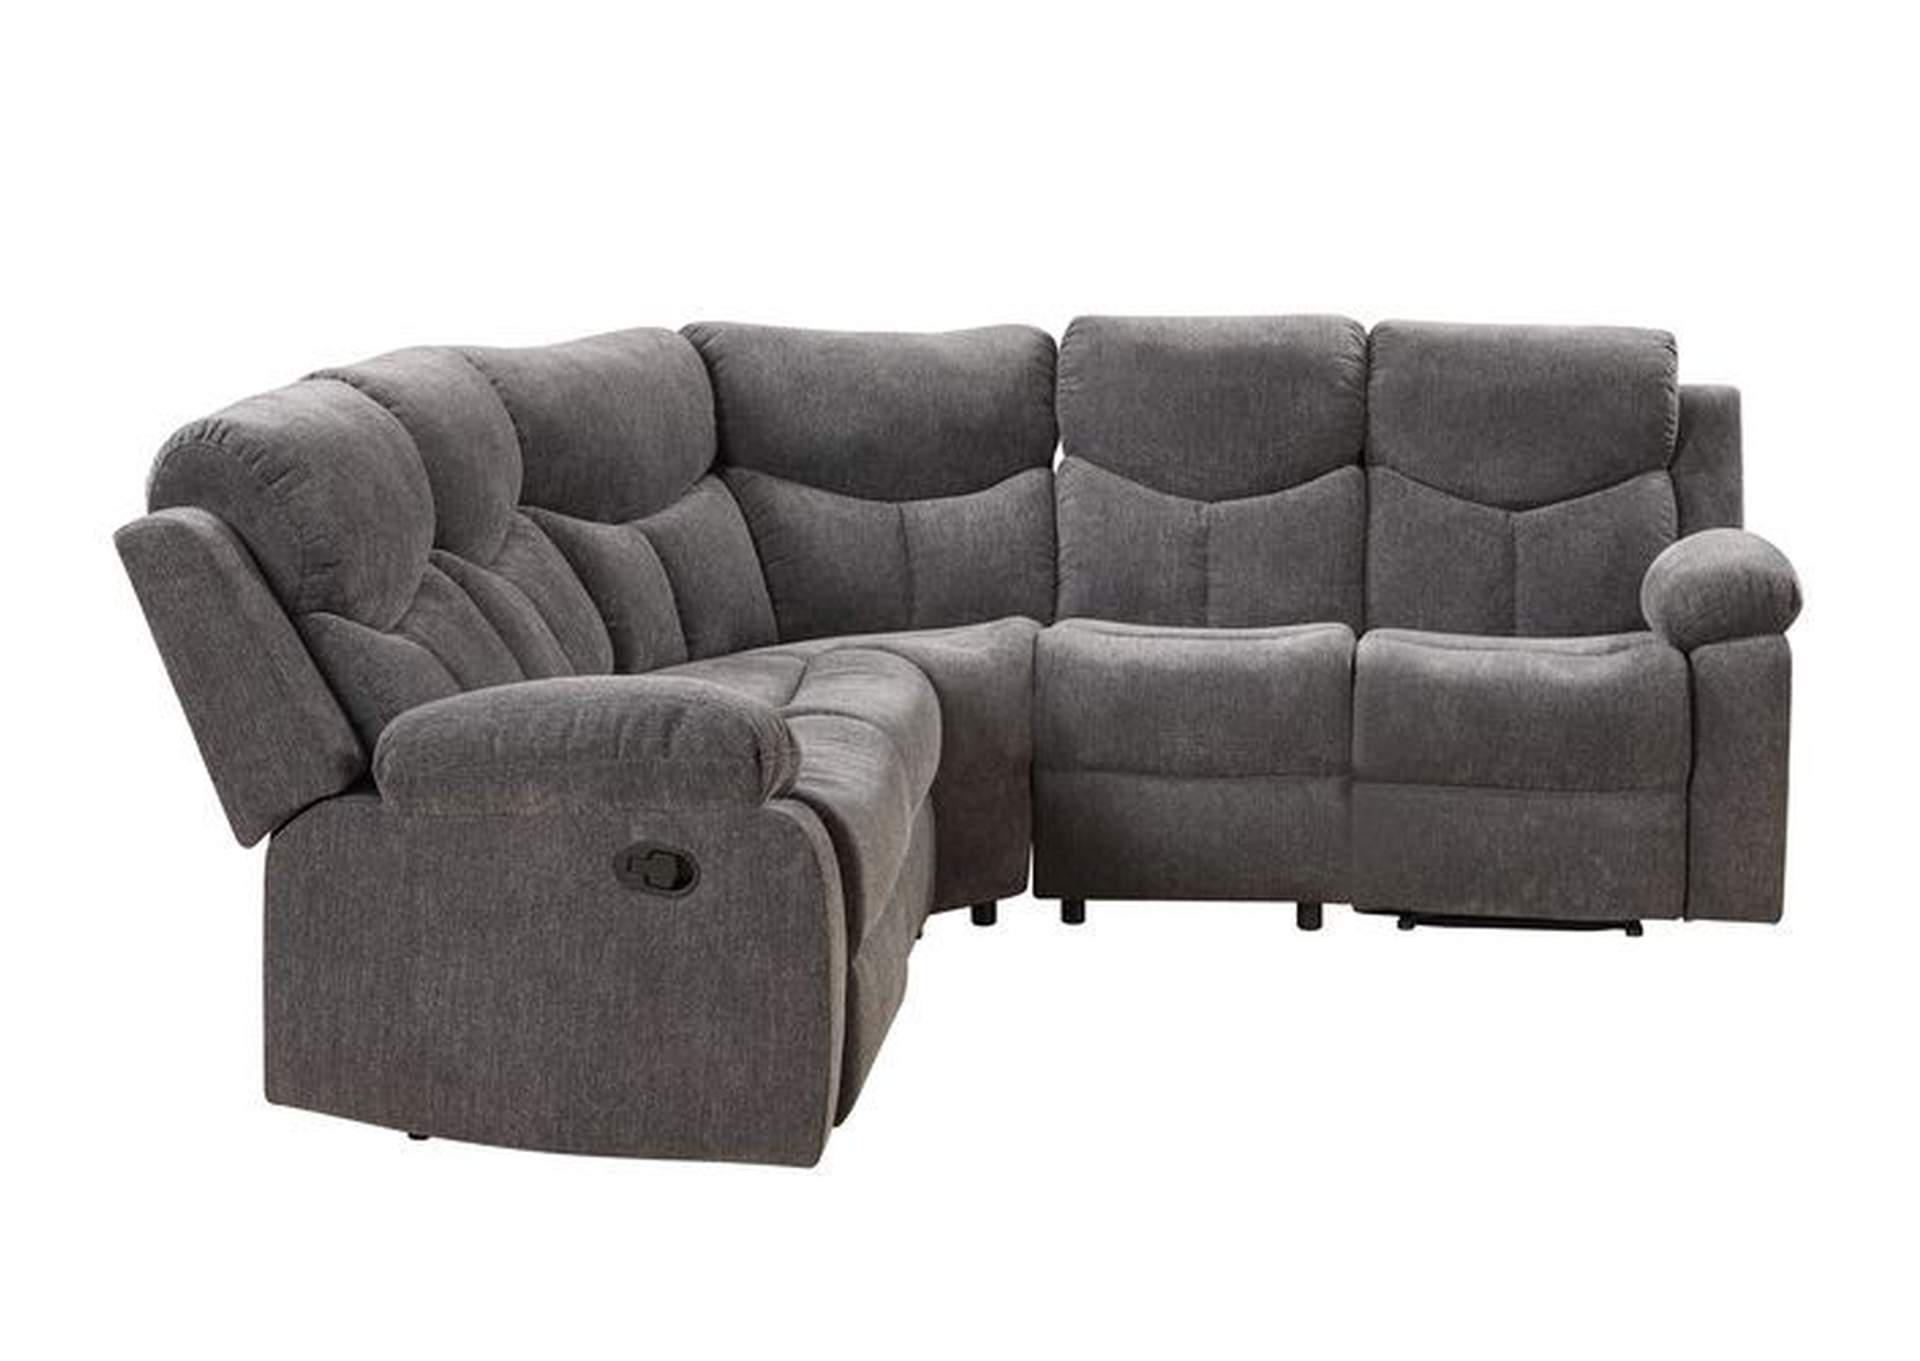 Kalen Sectional Sofa,Acme